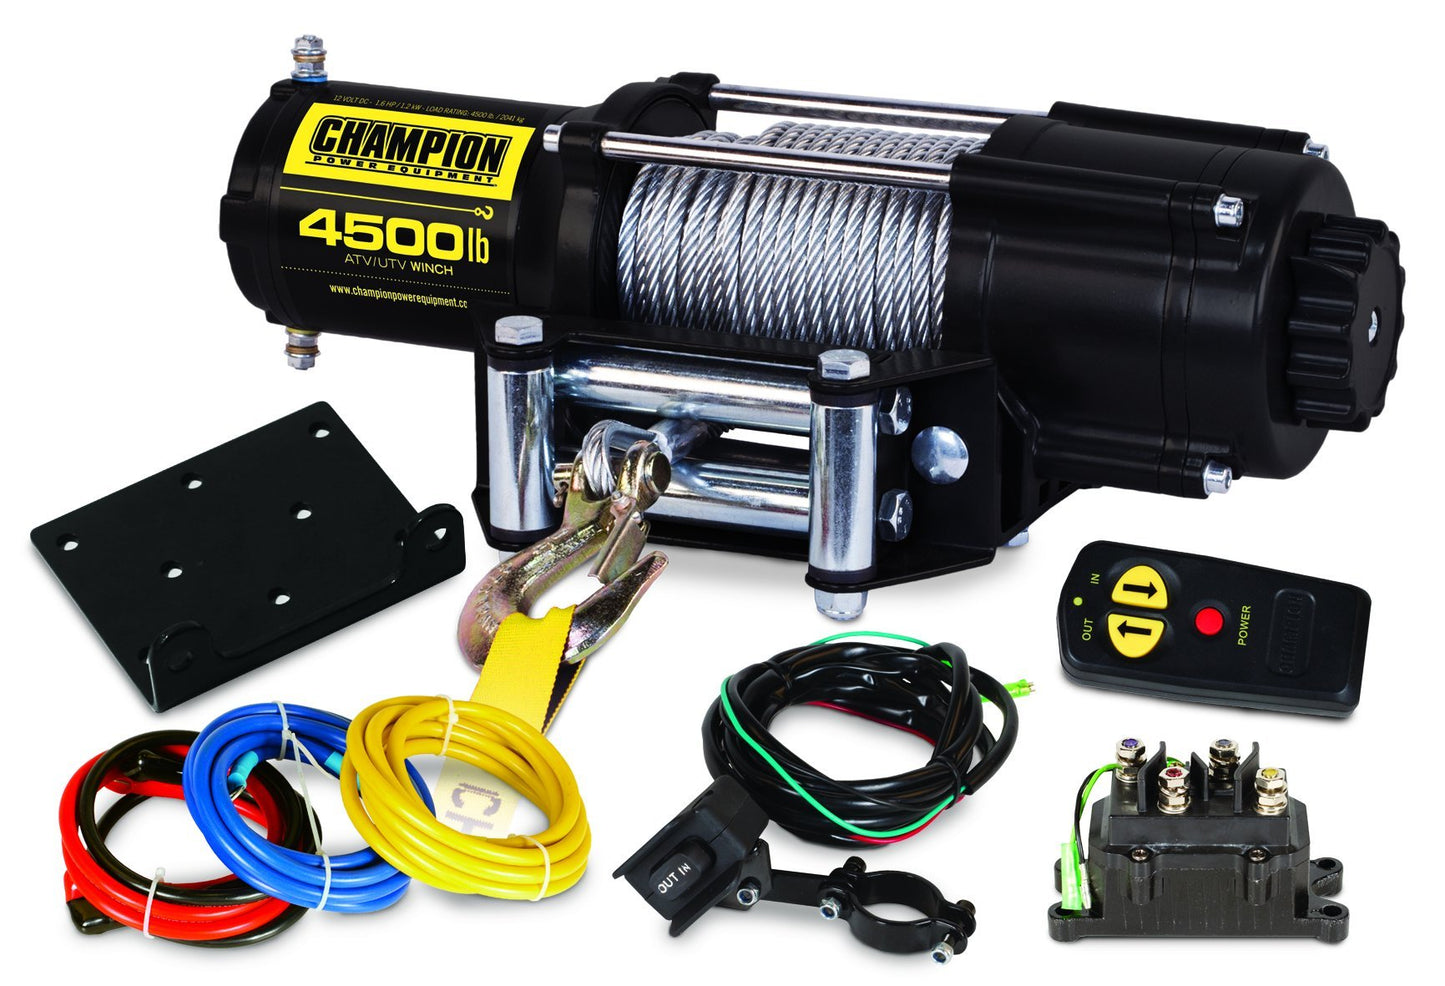 Champion Power Equipment-14560 4500-lb. ATV/UTV Wireless Winch Kit 4500 lb + ATV/UTV + Roller Fairlead